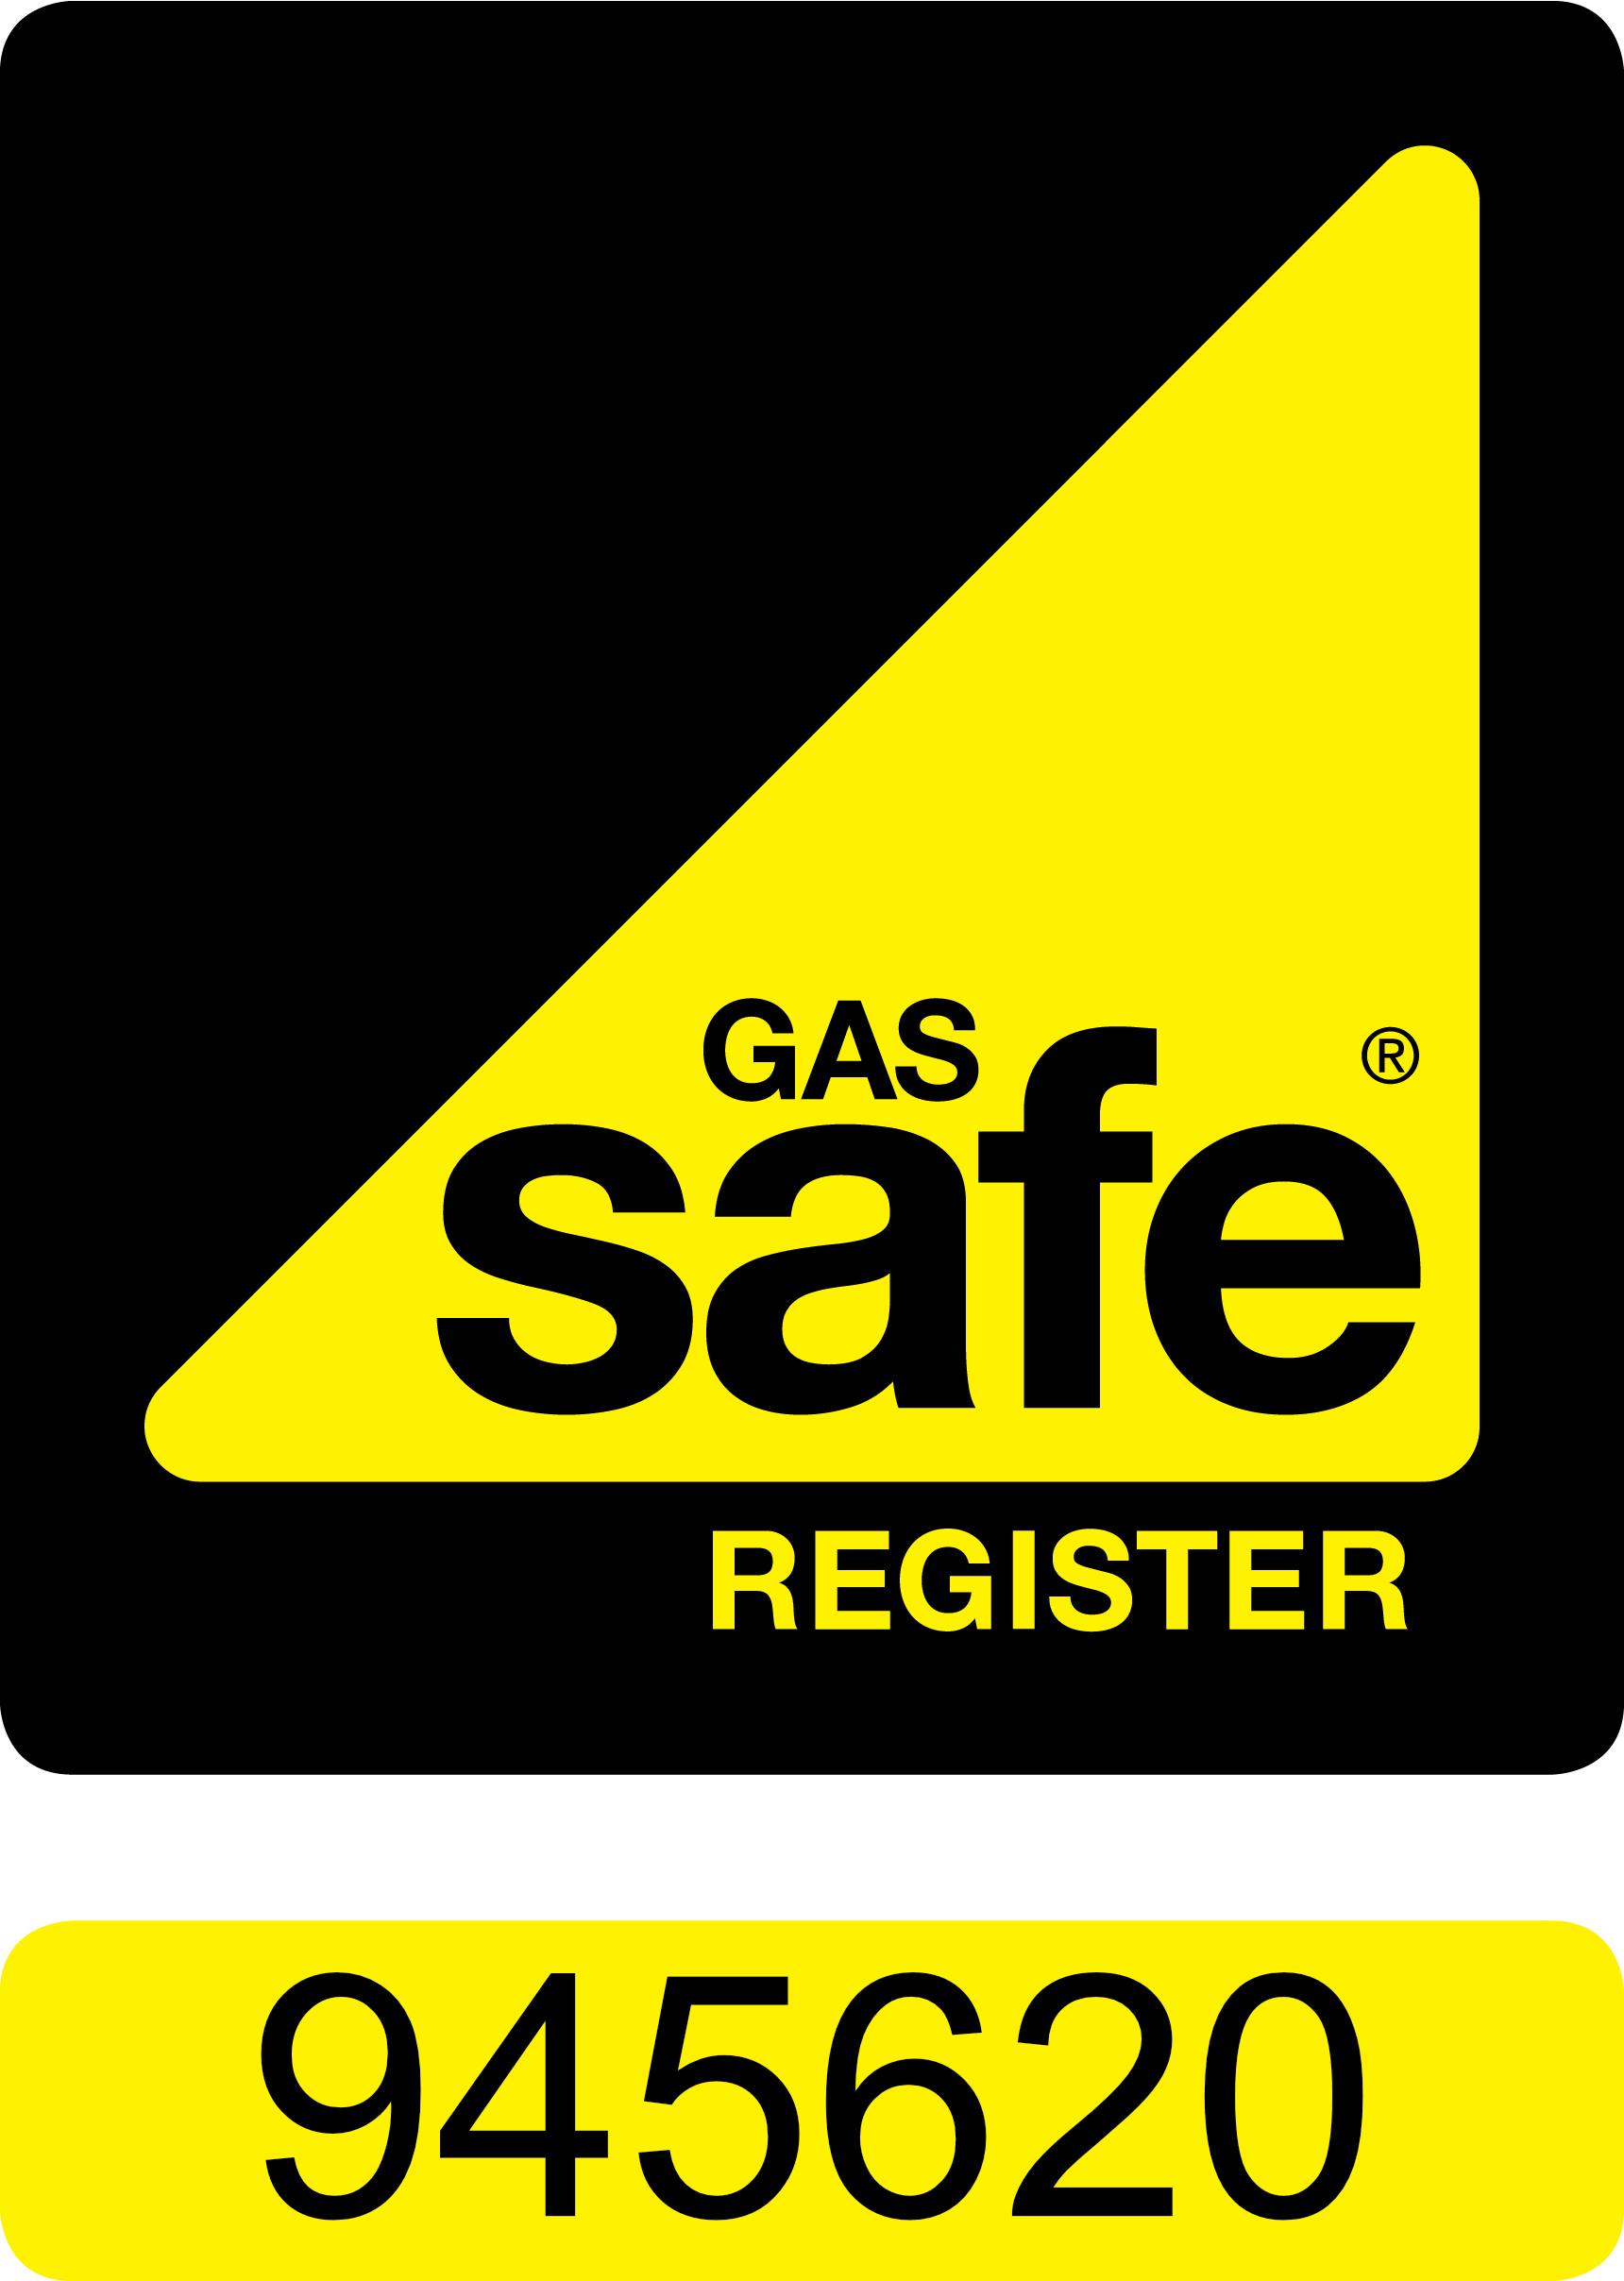 The Essex Bathroom Company Gas Safe Logo with Registration Number